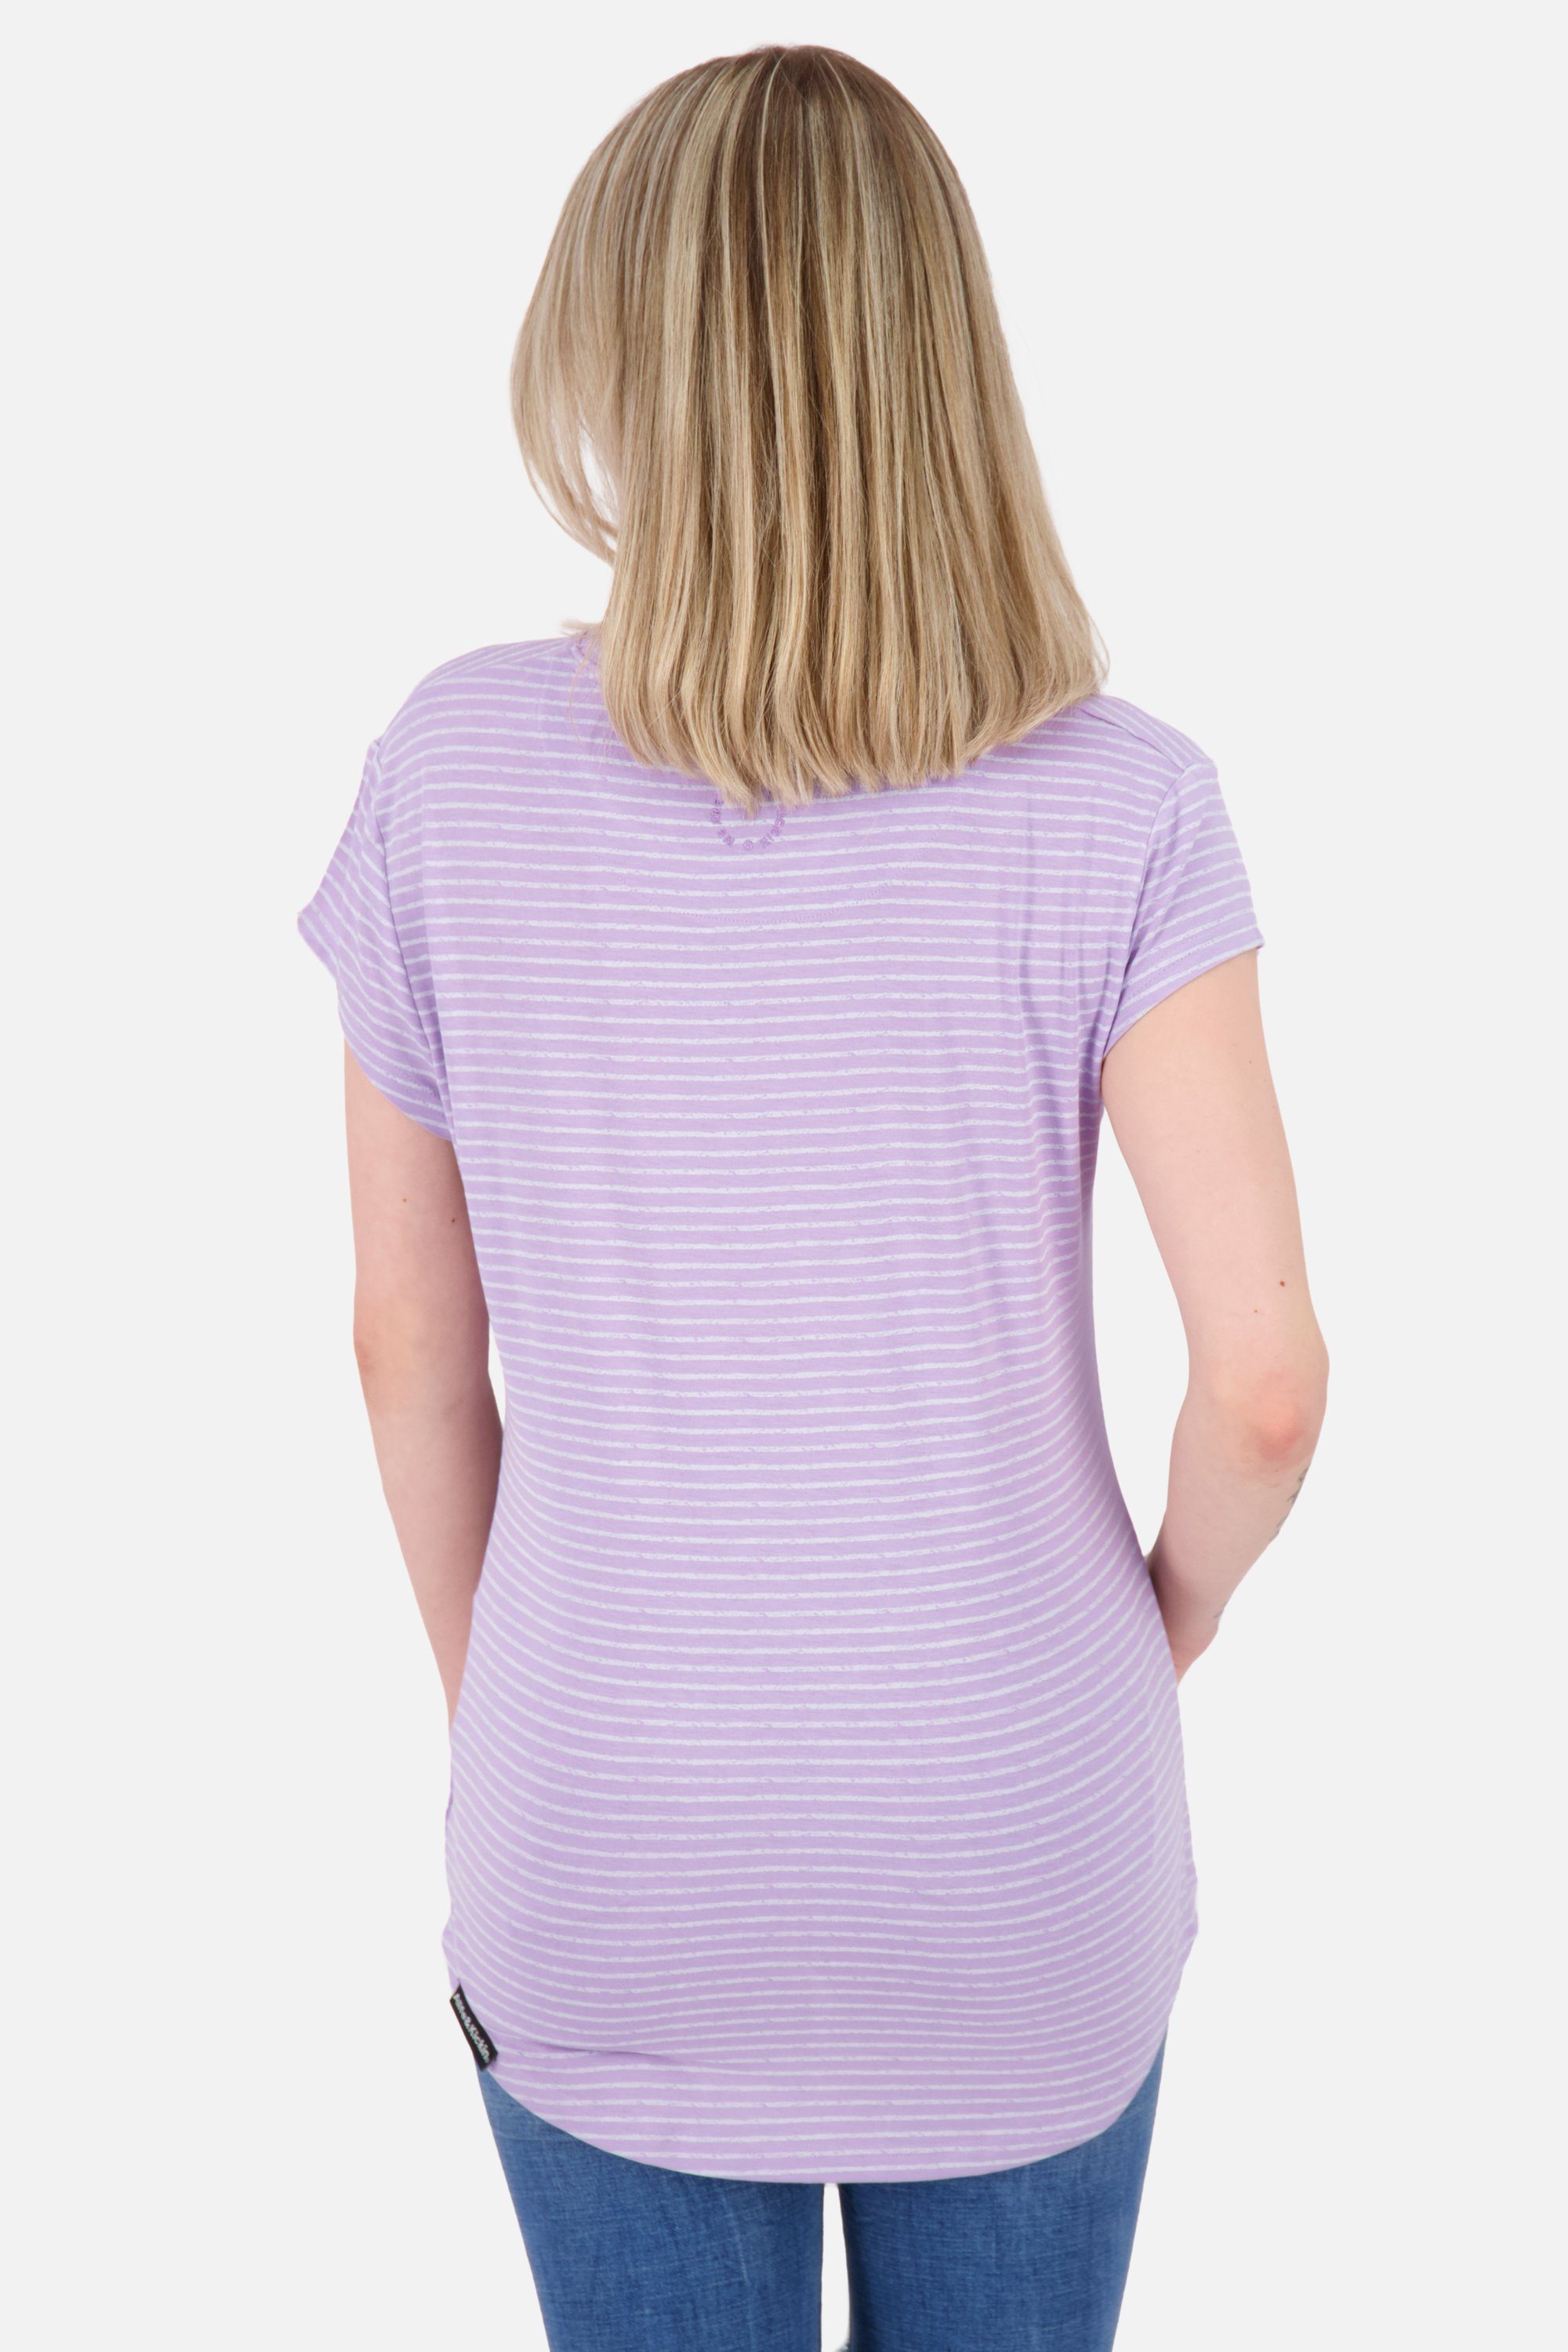 Alife & Shirt Z Shirt lavender digital Rundhalsshirt Kurzarmshirt, Damen Kickin MimmyAK